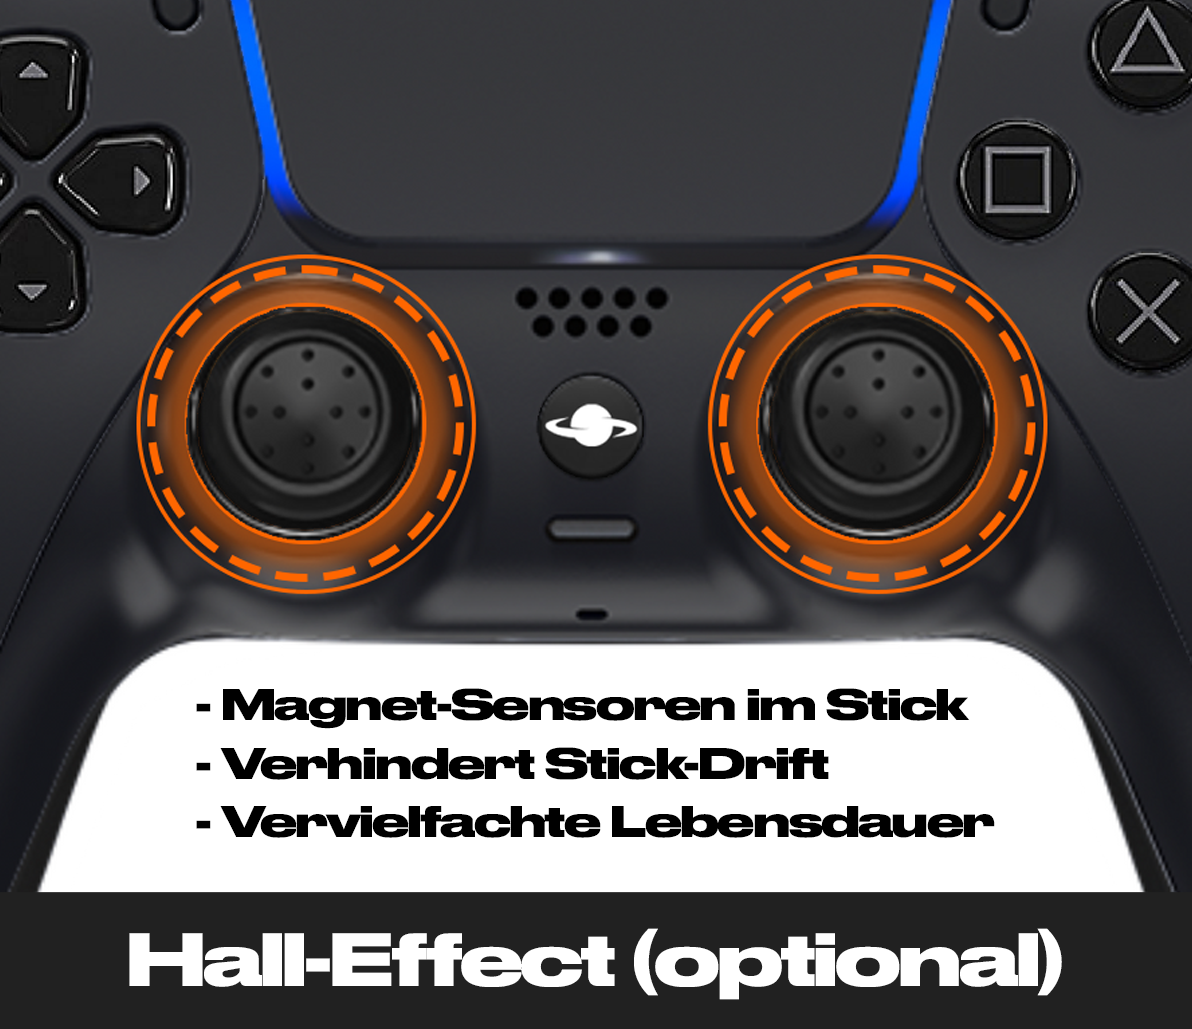 PS5 Custom Controller 'Transparent Blue'